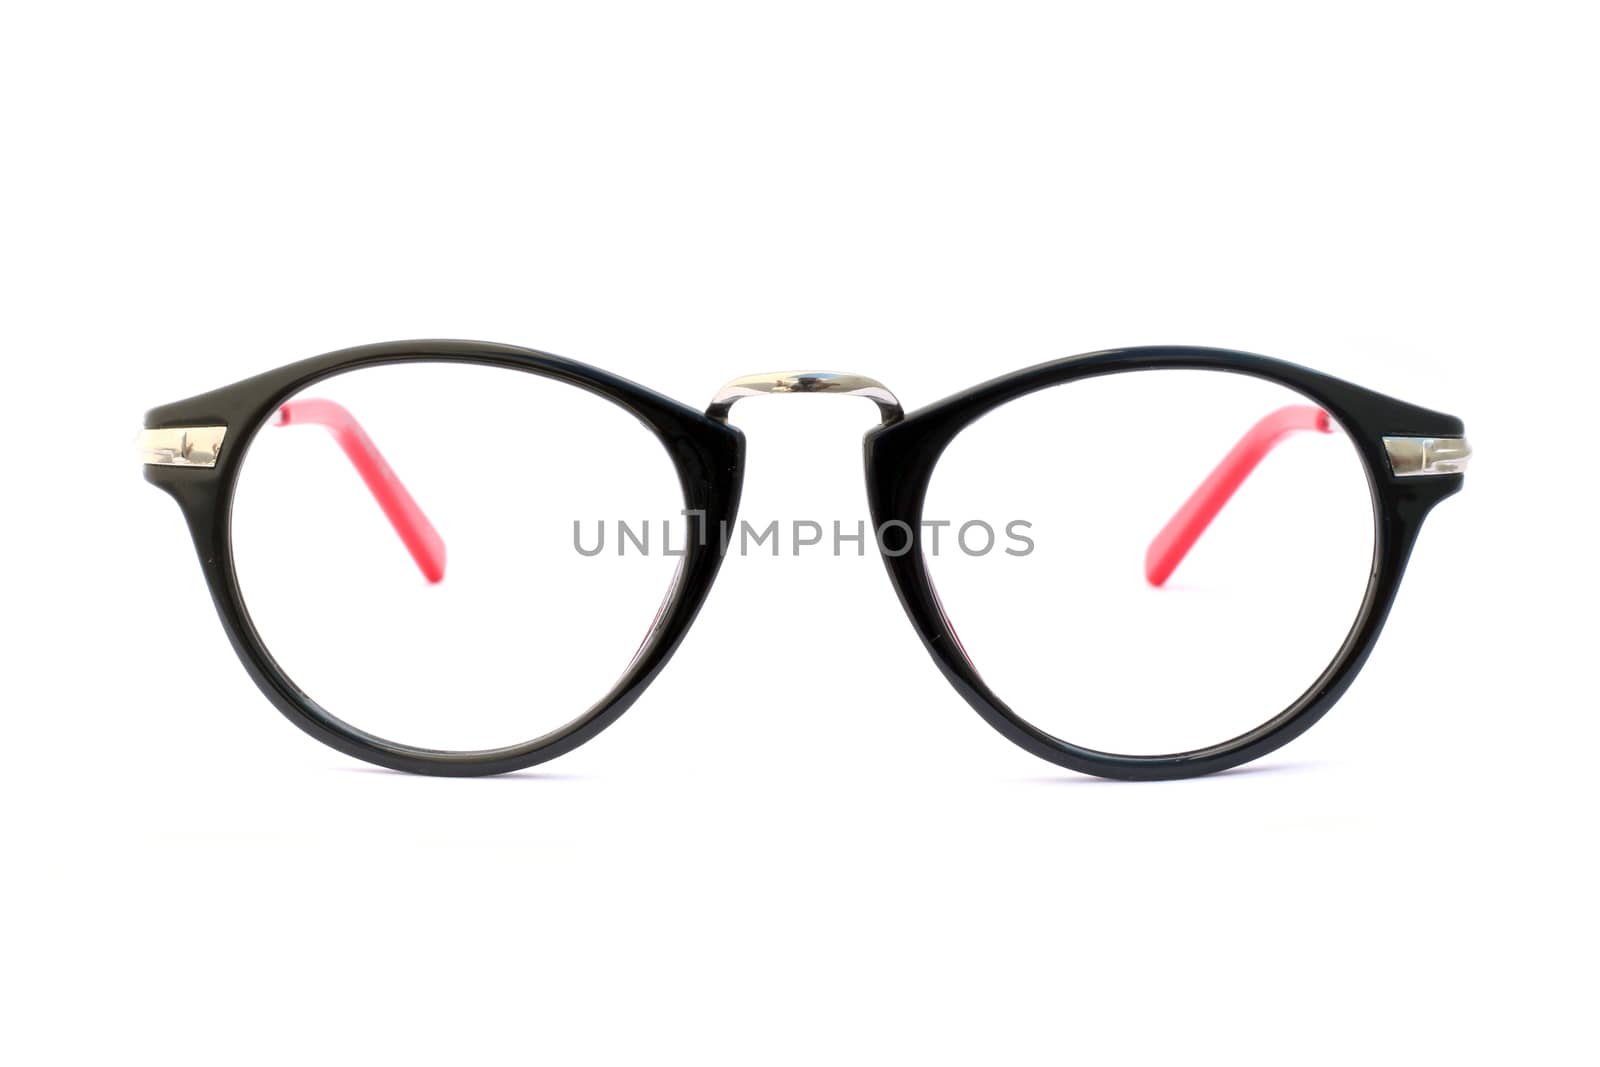 Image of eyeglasses on a white background by yod67